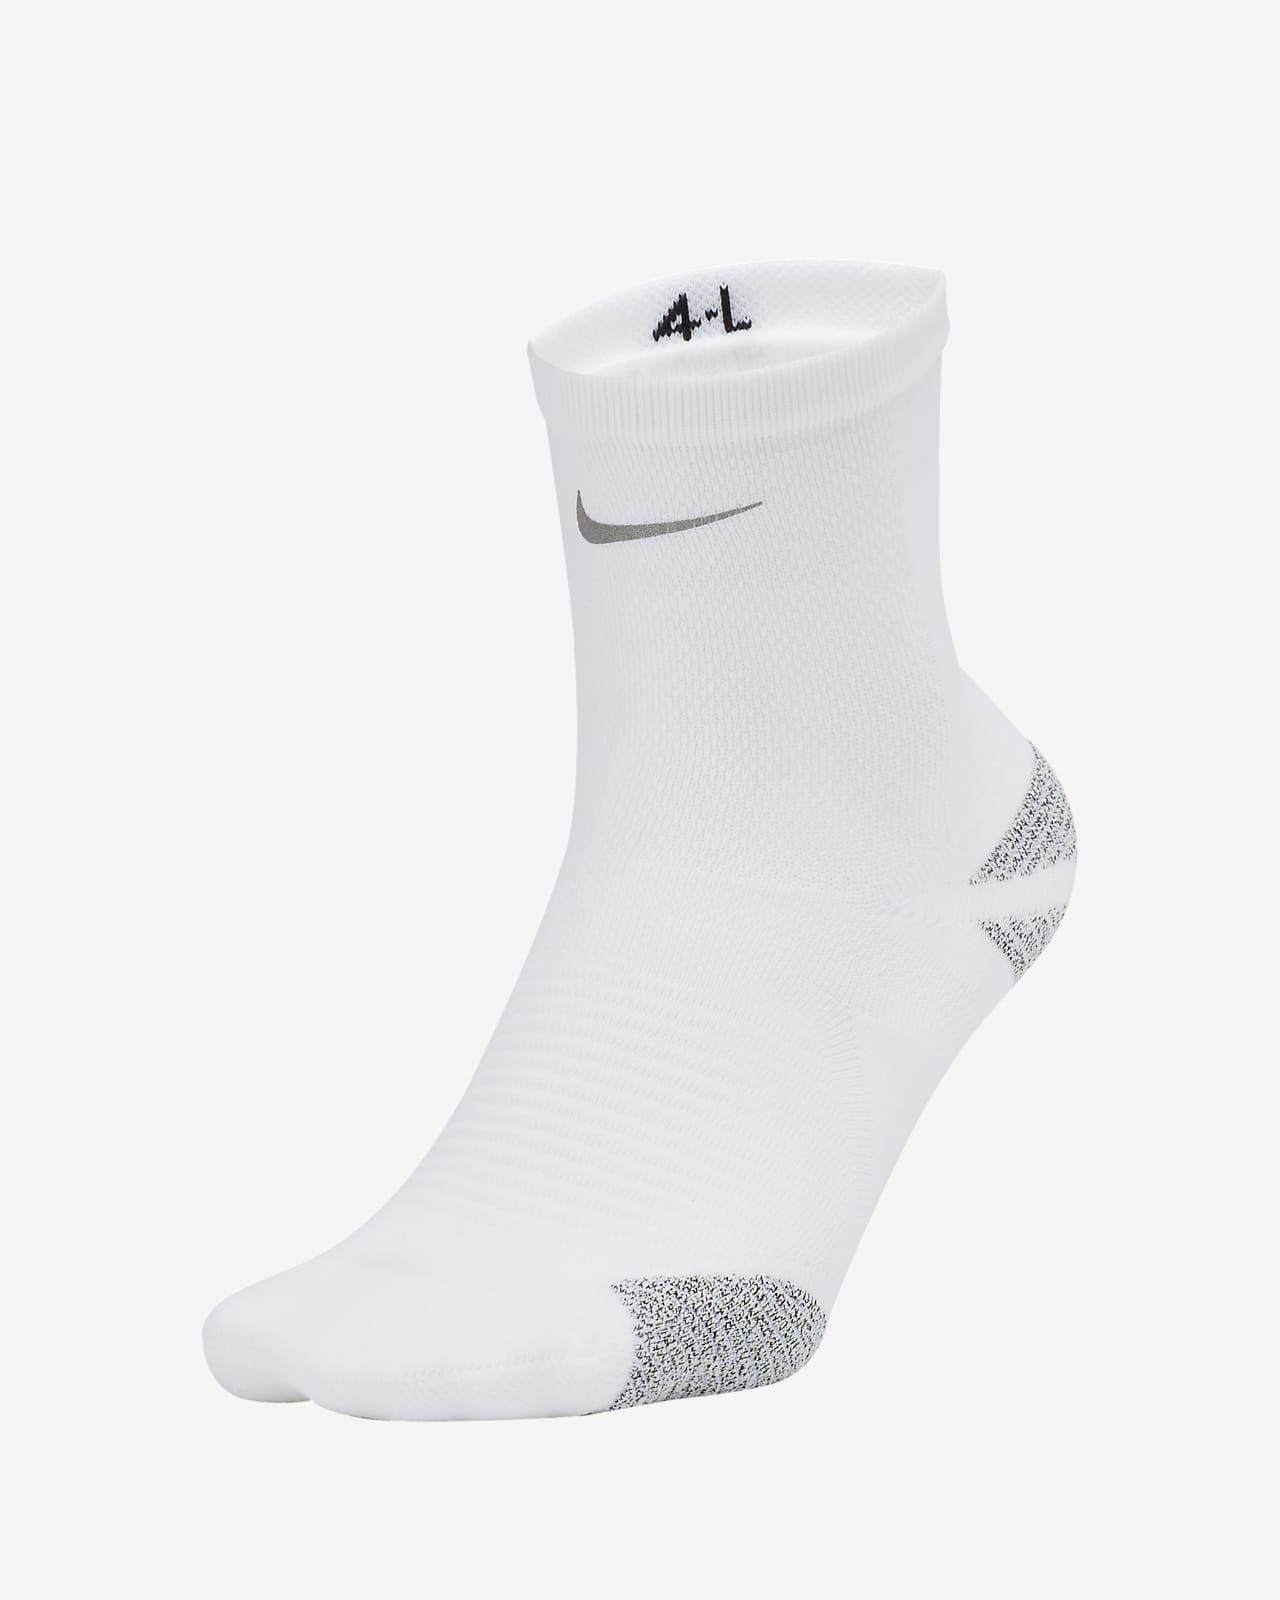 ankle elite socks